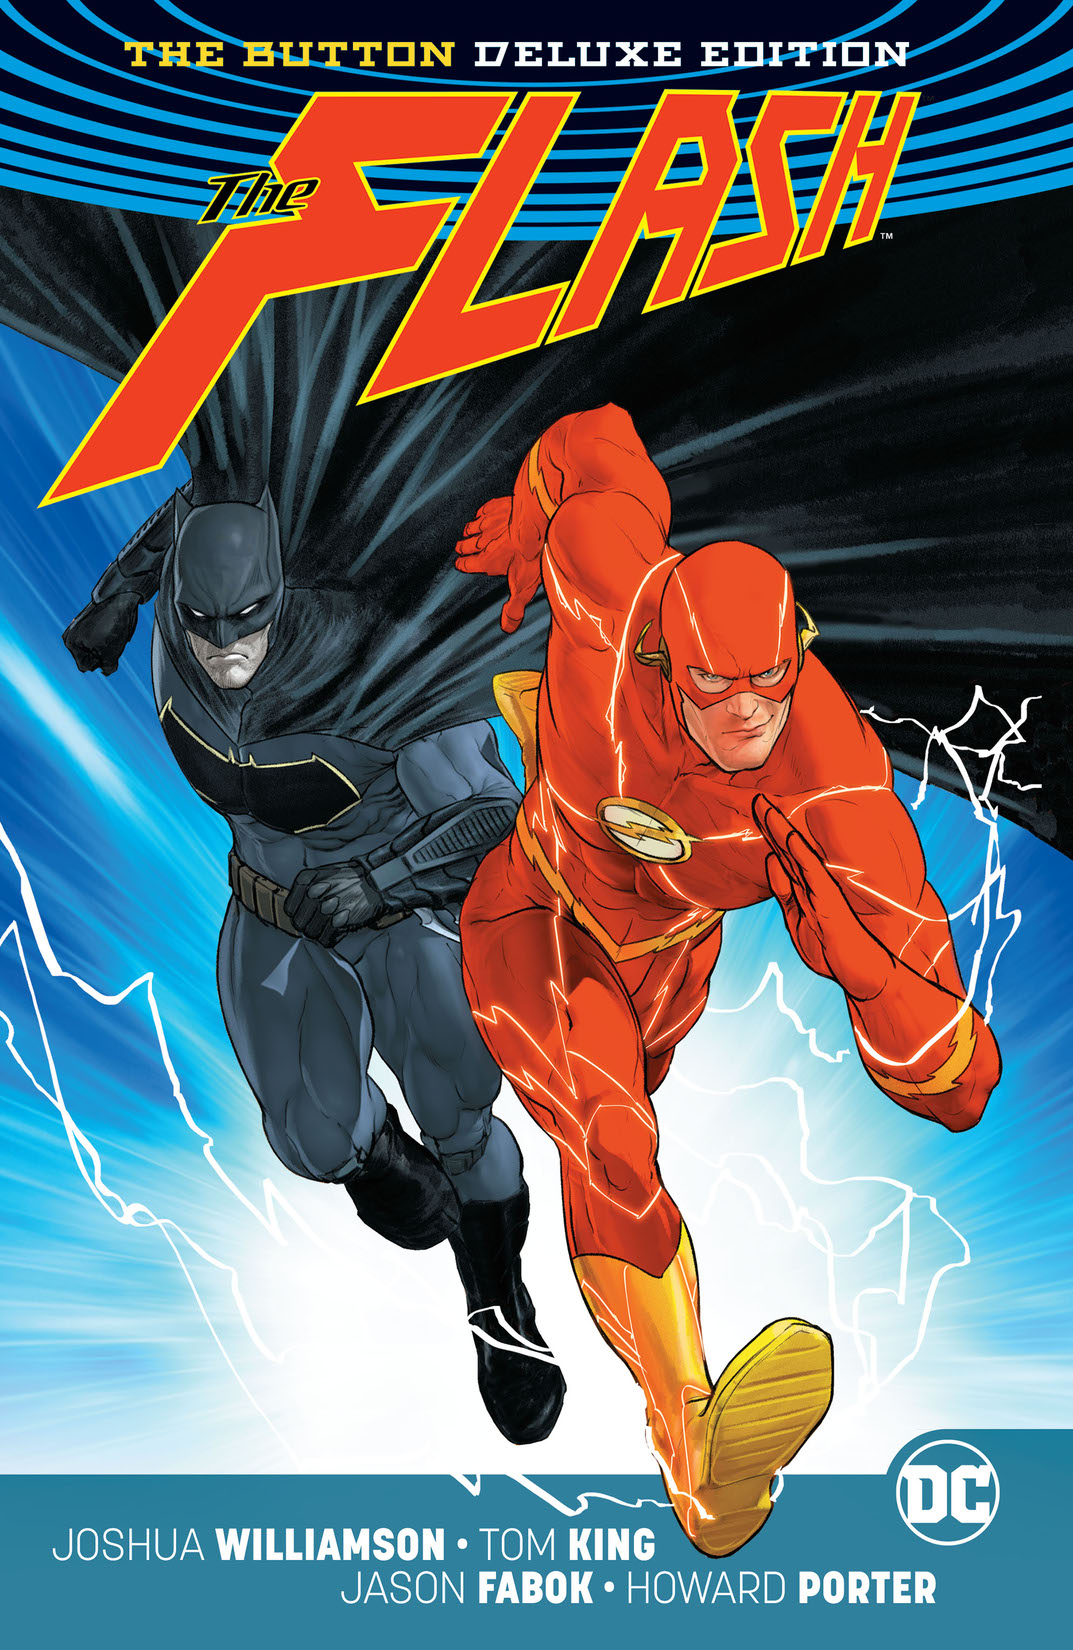 Batman/The Flash: The Button International Version preview images